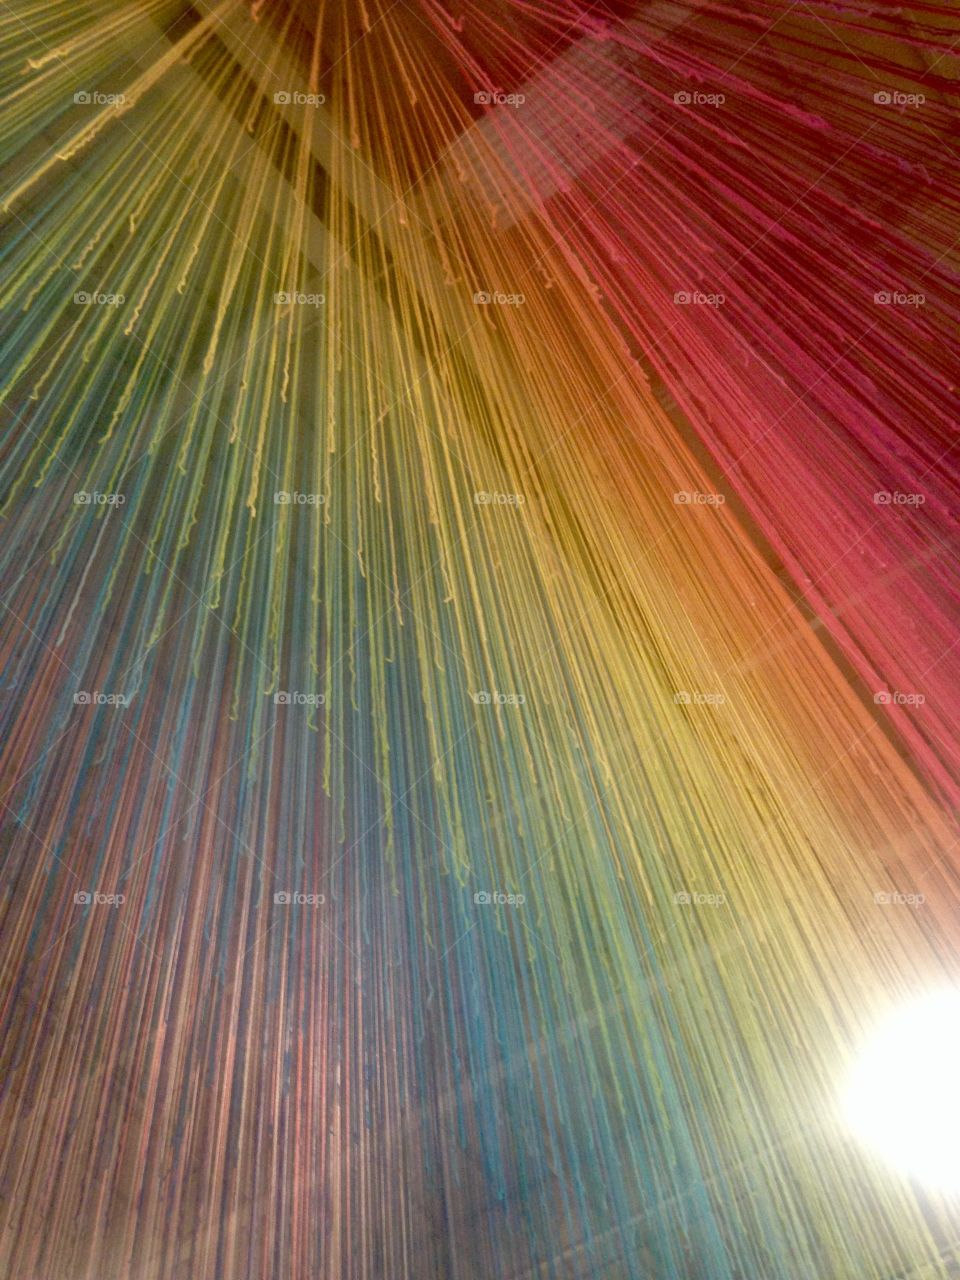 Rainbow yarn art